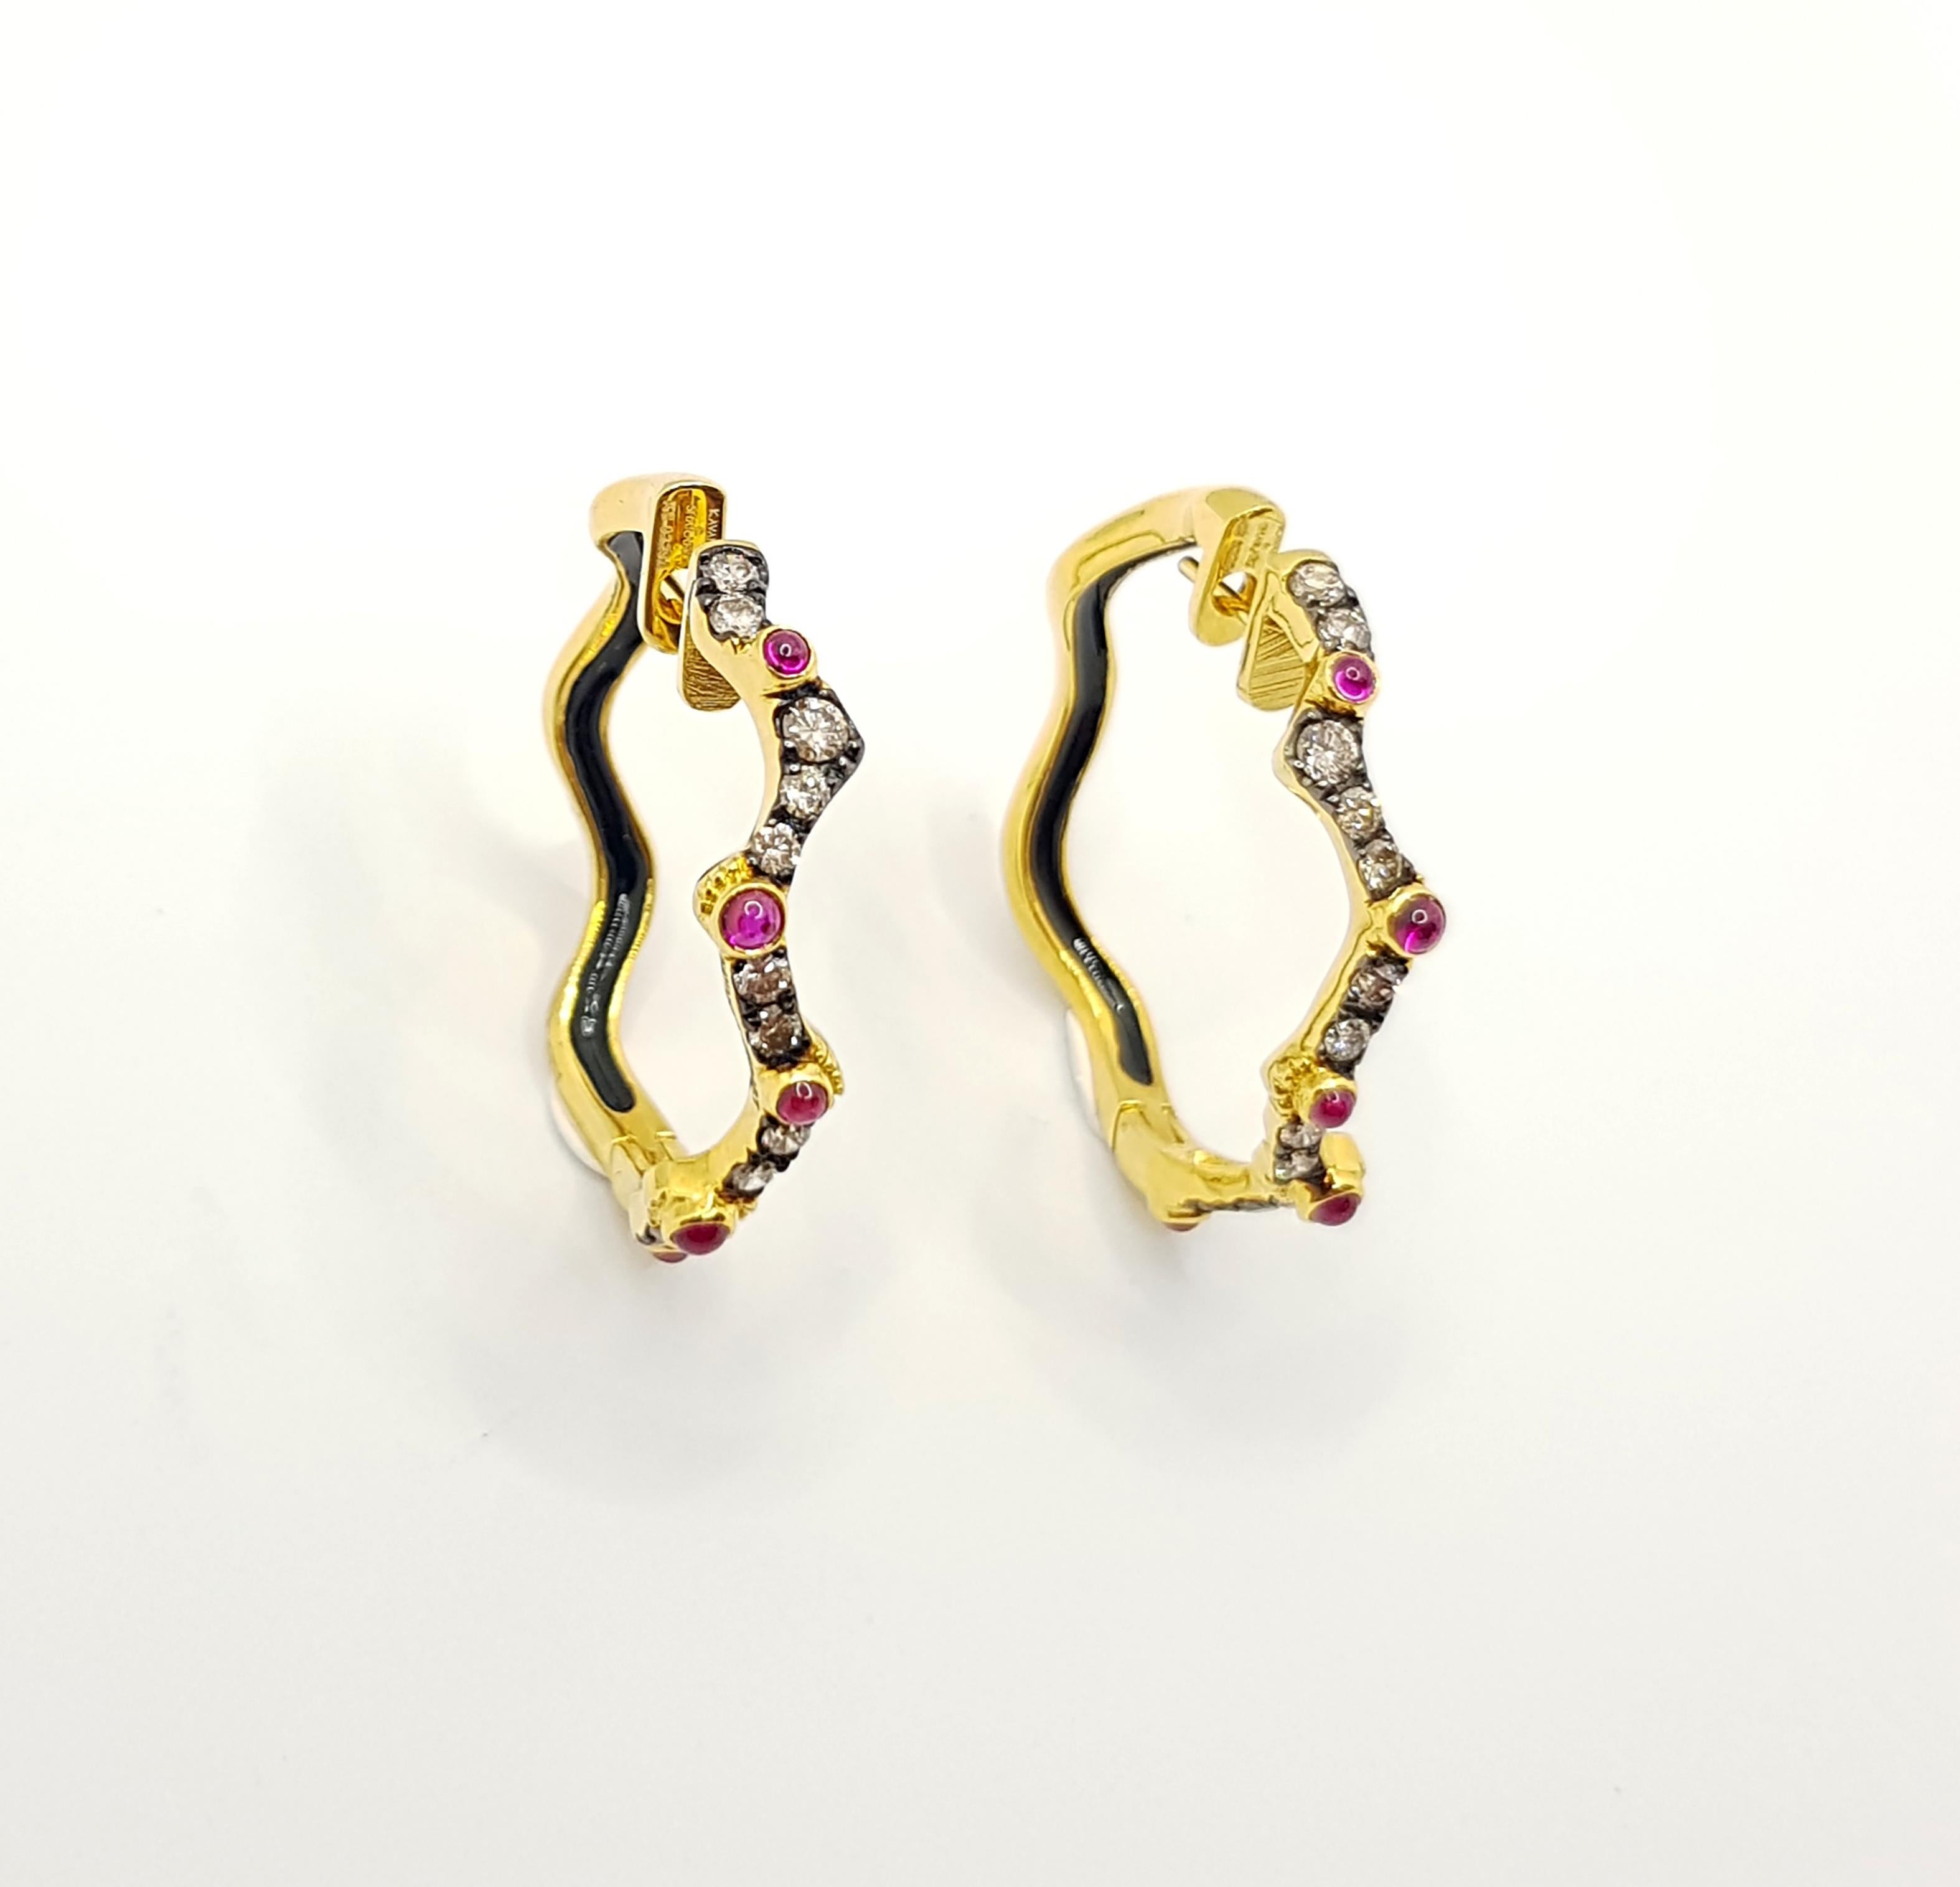 k gold hoop earrings wholesaler -china -china -forum -blog -wikipedia -.cn -.gov -alibaba